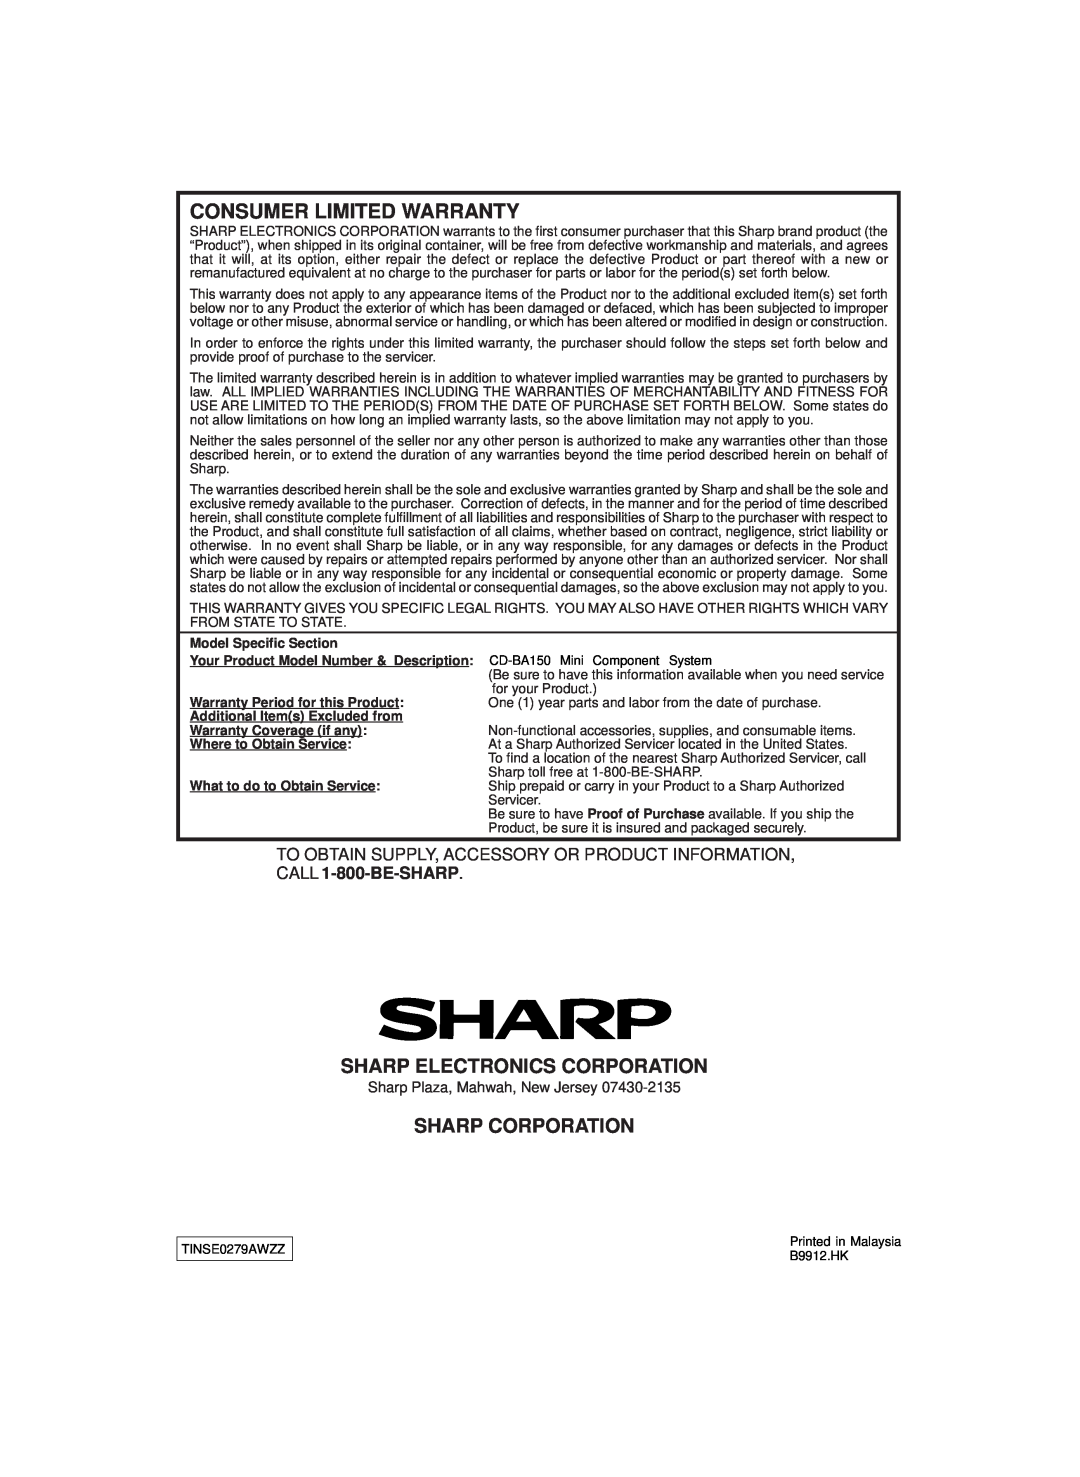 Sharp CD-BA150 Consumer Limited Warranty, Sharp Electronics Corporation, Sharp Corporation, Model Specific Section 